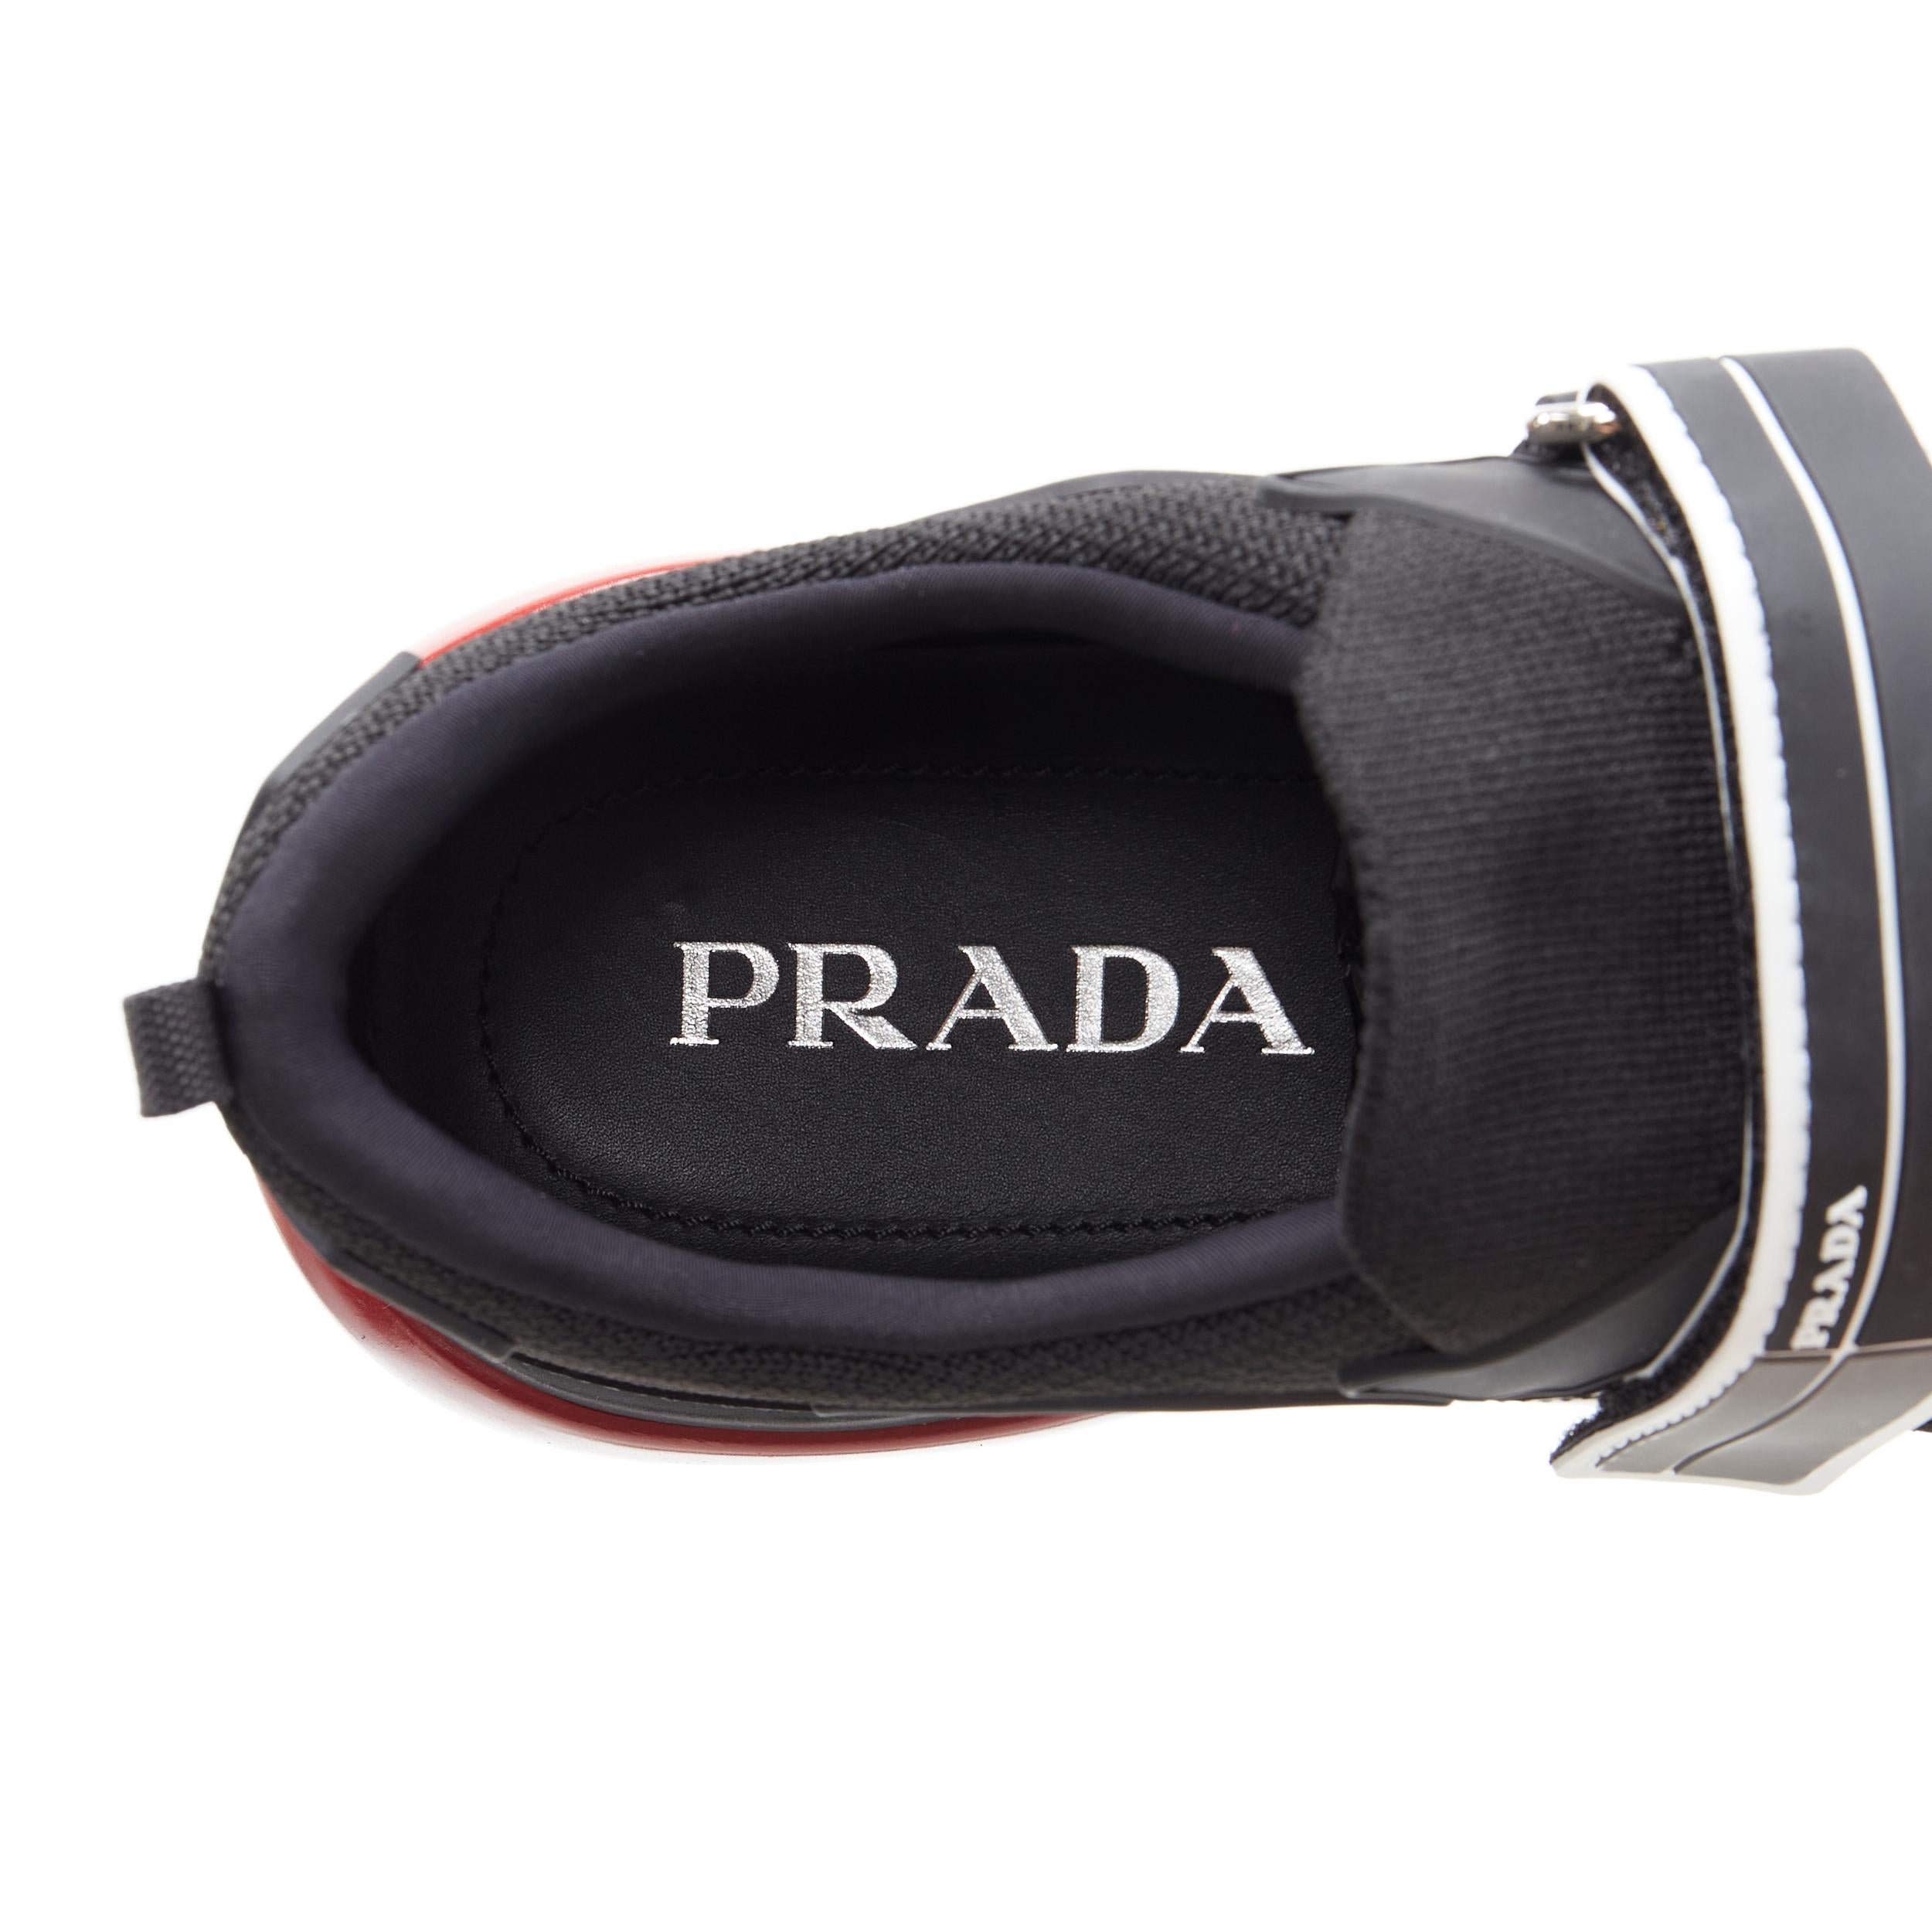 new PRADA Cloudbust black red logo rubber strapped low top sneakers UK7.5 EU41.5 3